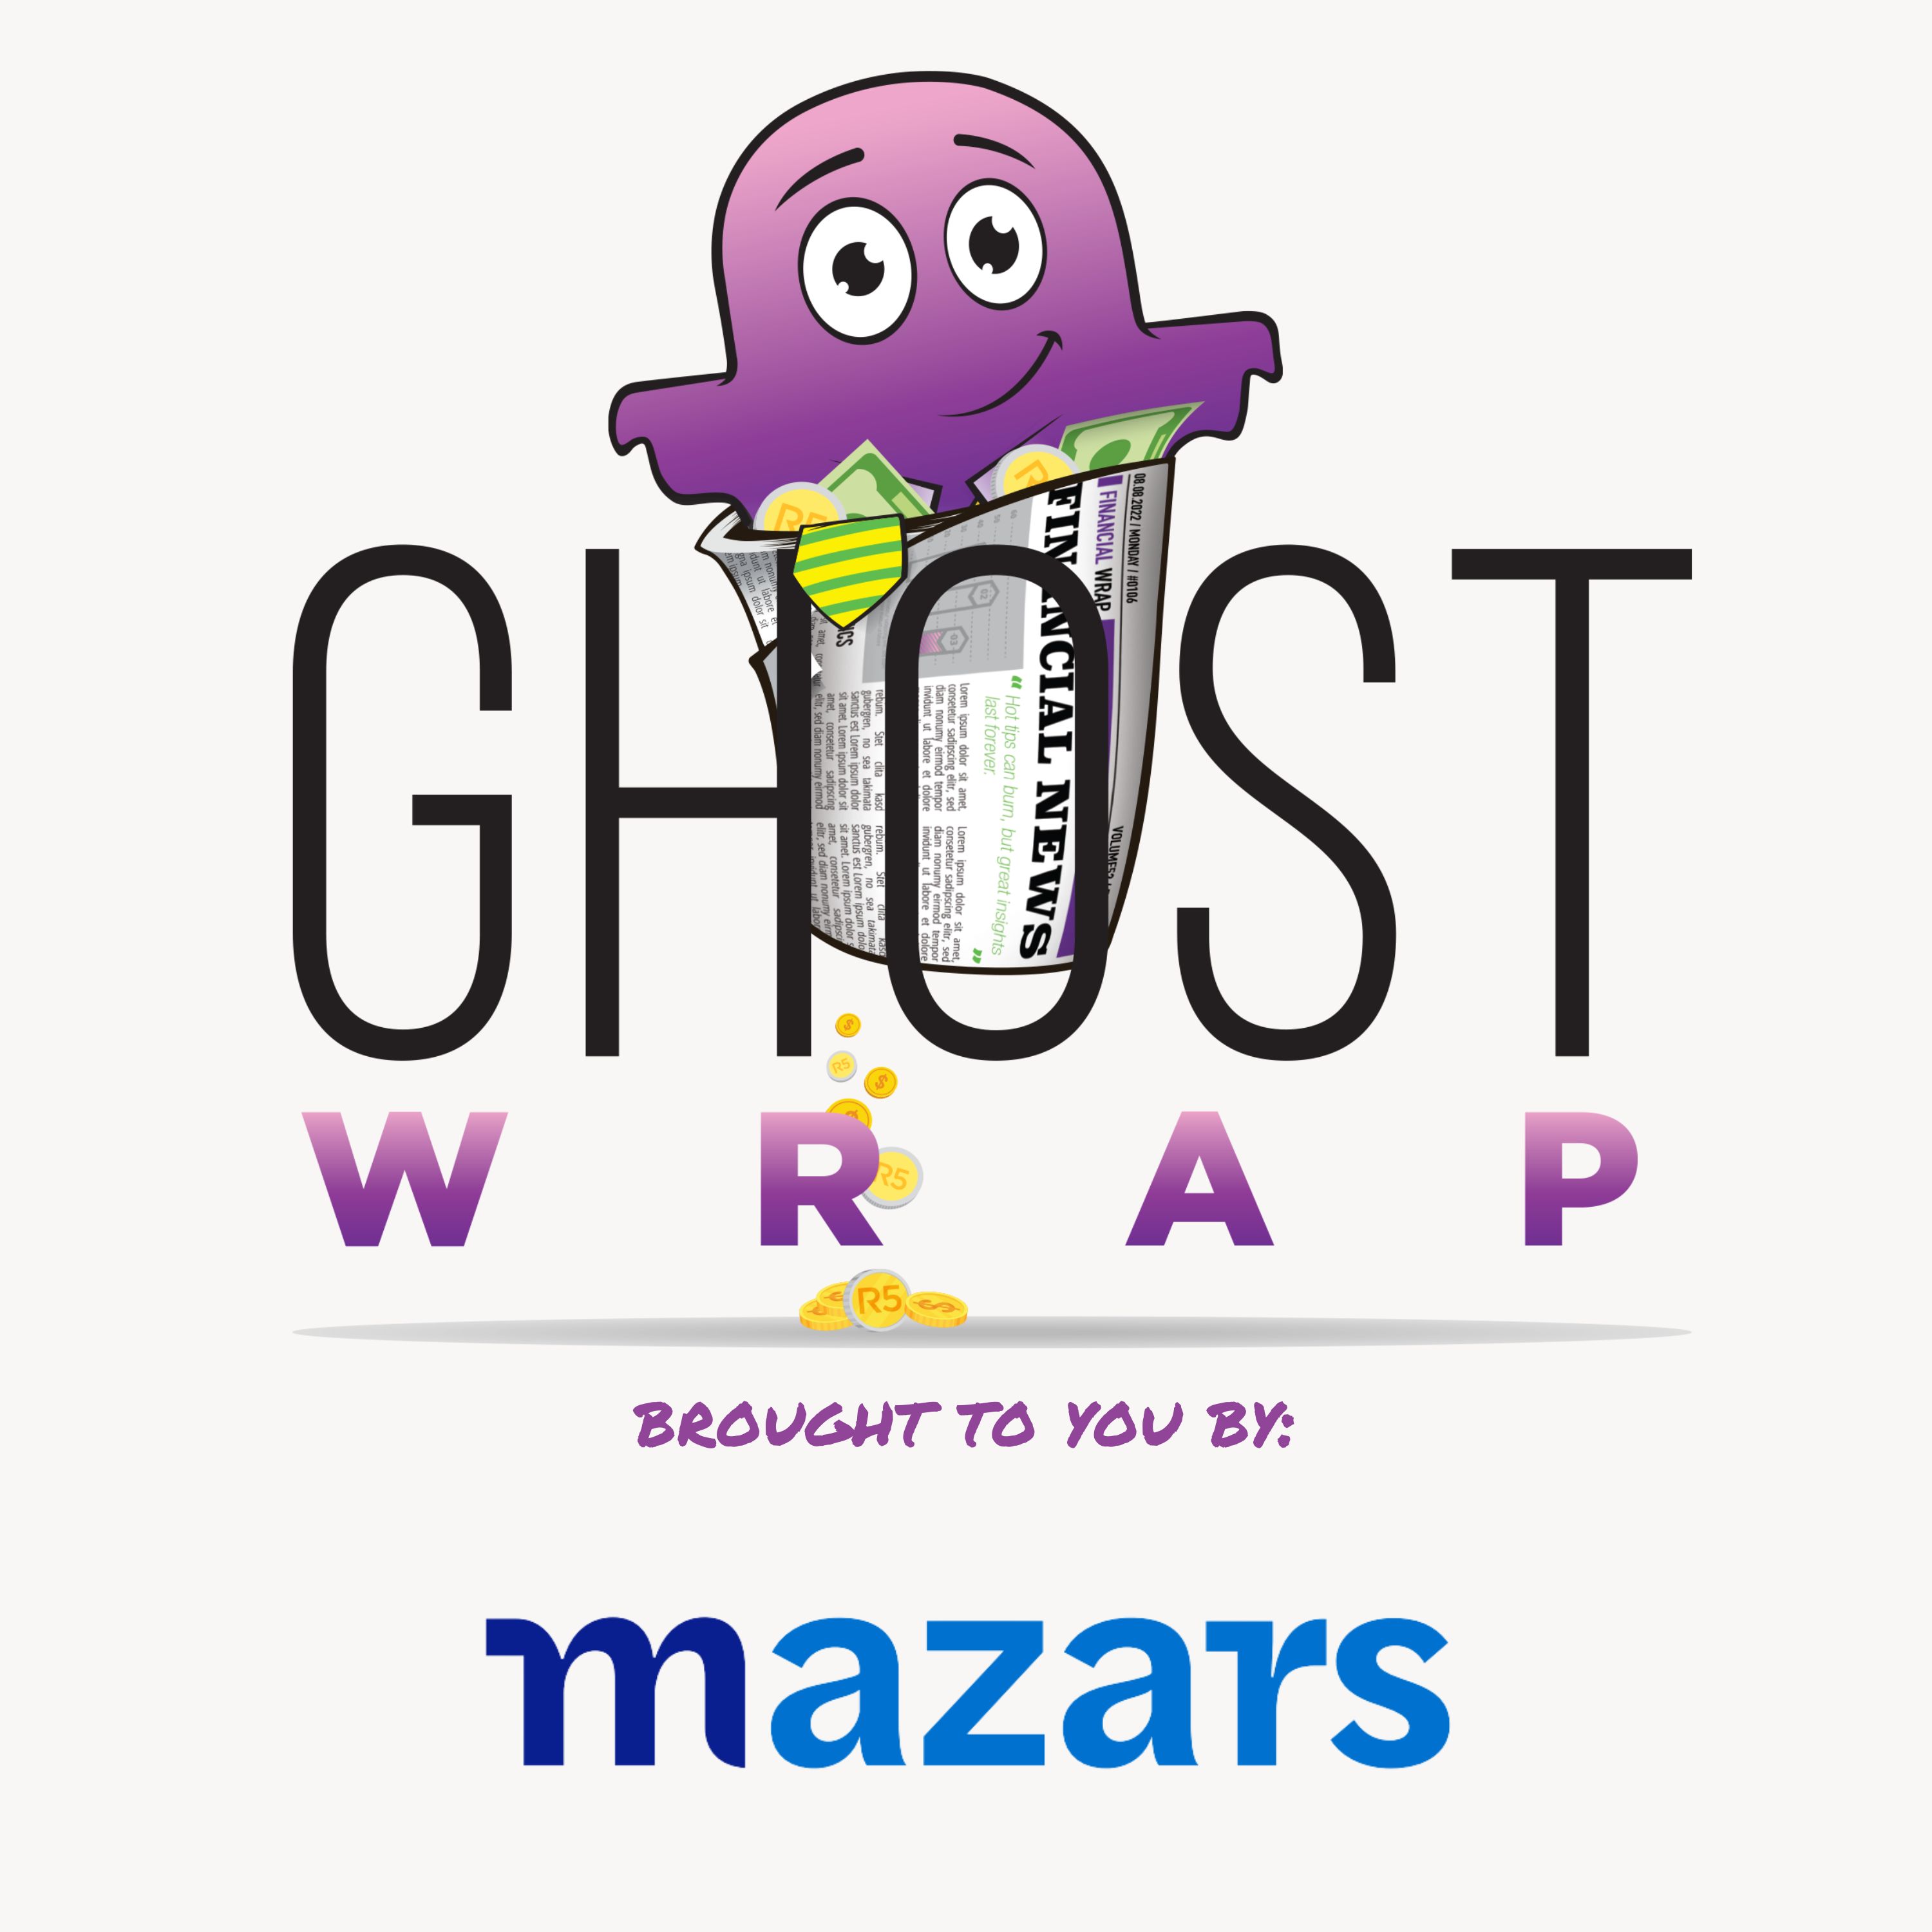 Ghost Wrap #44 (Bowler Metcalf | City Lodge | Shoprite | The Foschini Group | Bidvest | AVI)